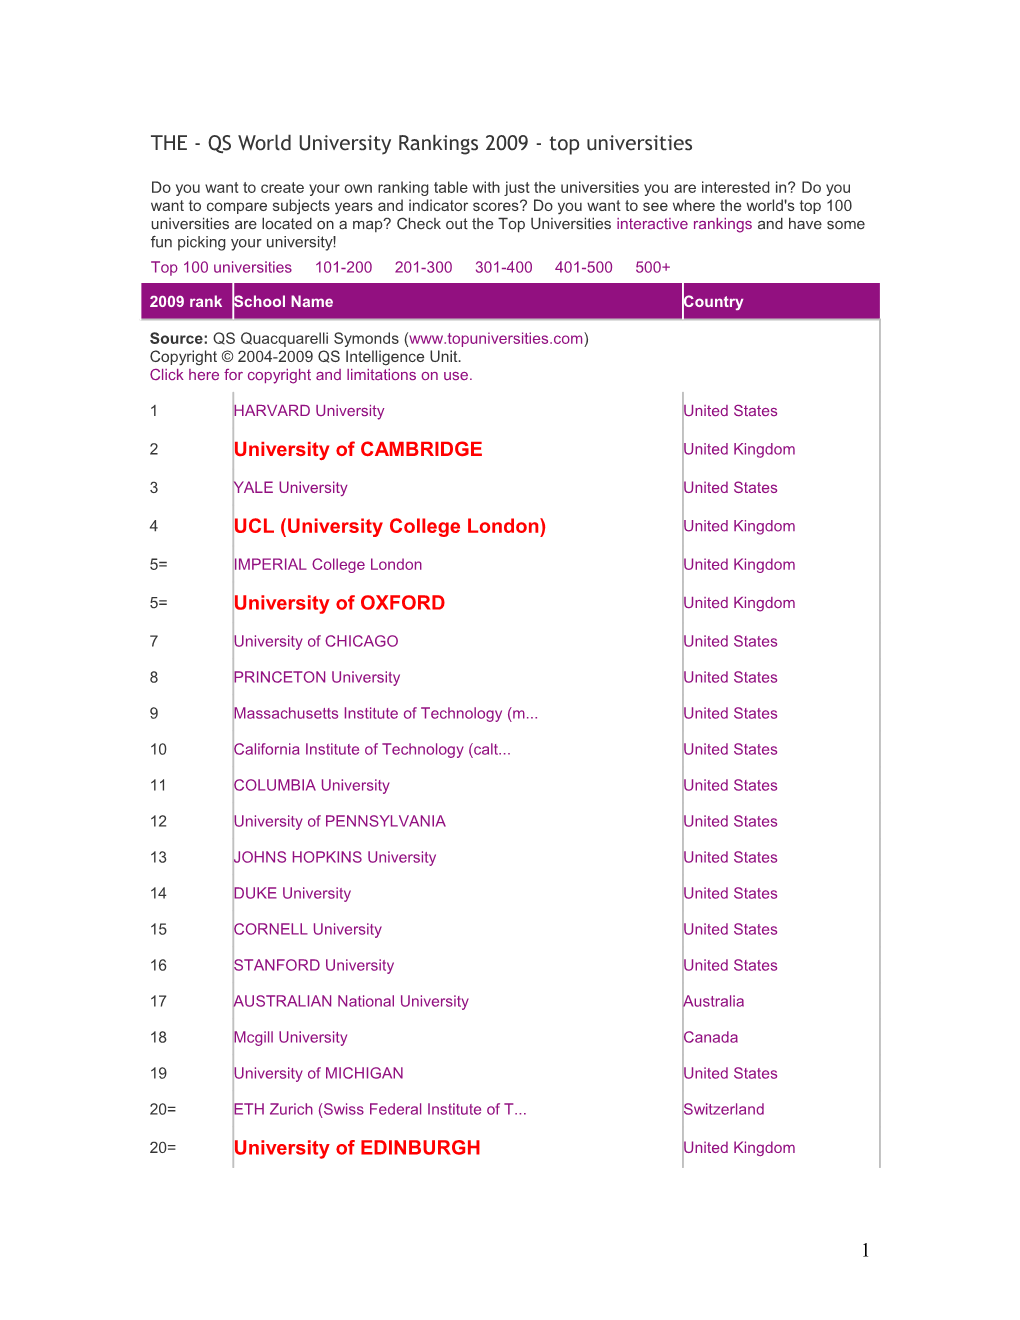 THE - QS World University Rankings 2009 - Top Universities